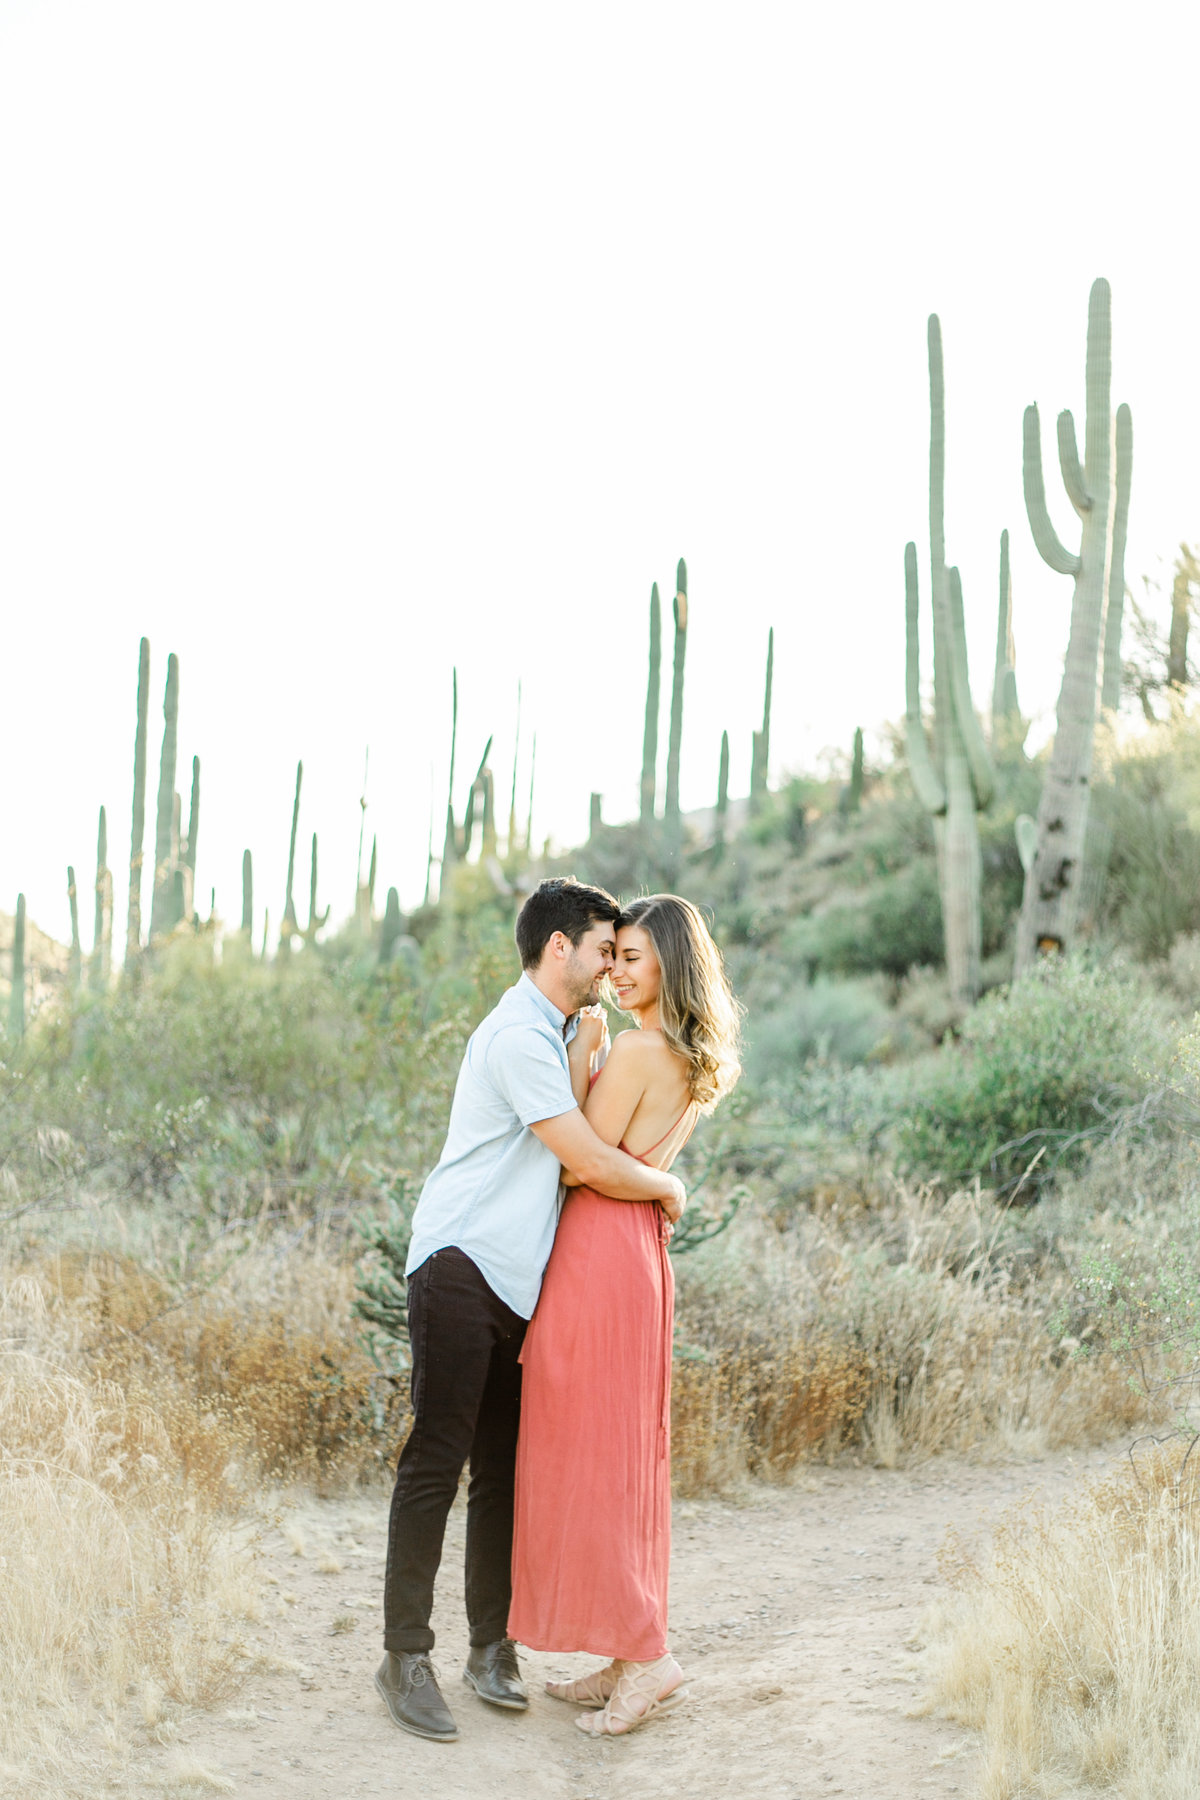 Karlie Colleen Photography - Arizona Desert Engagement - Brynne & Josh -95